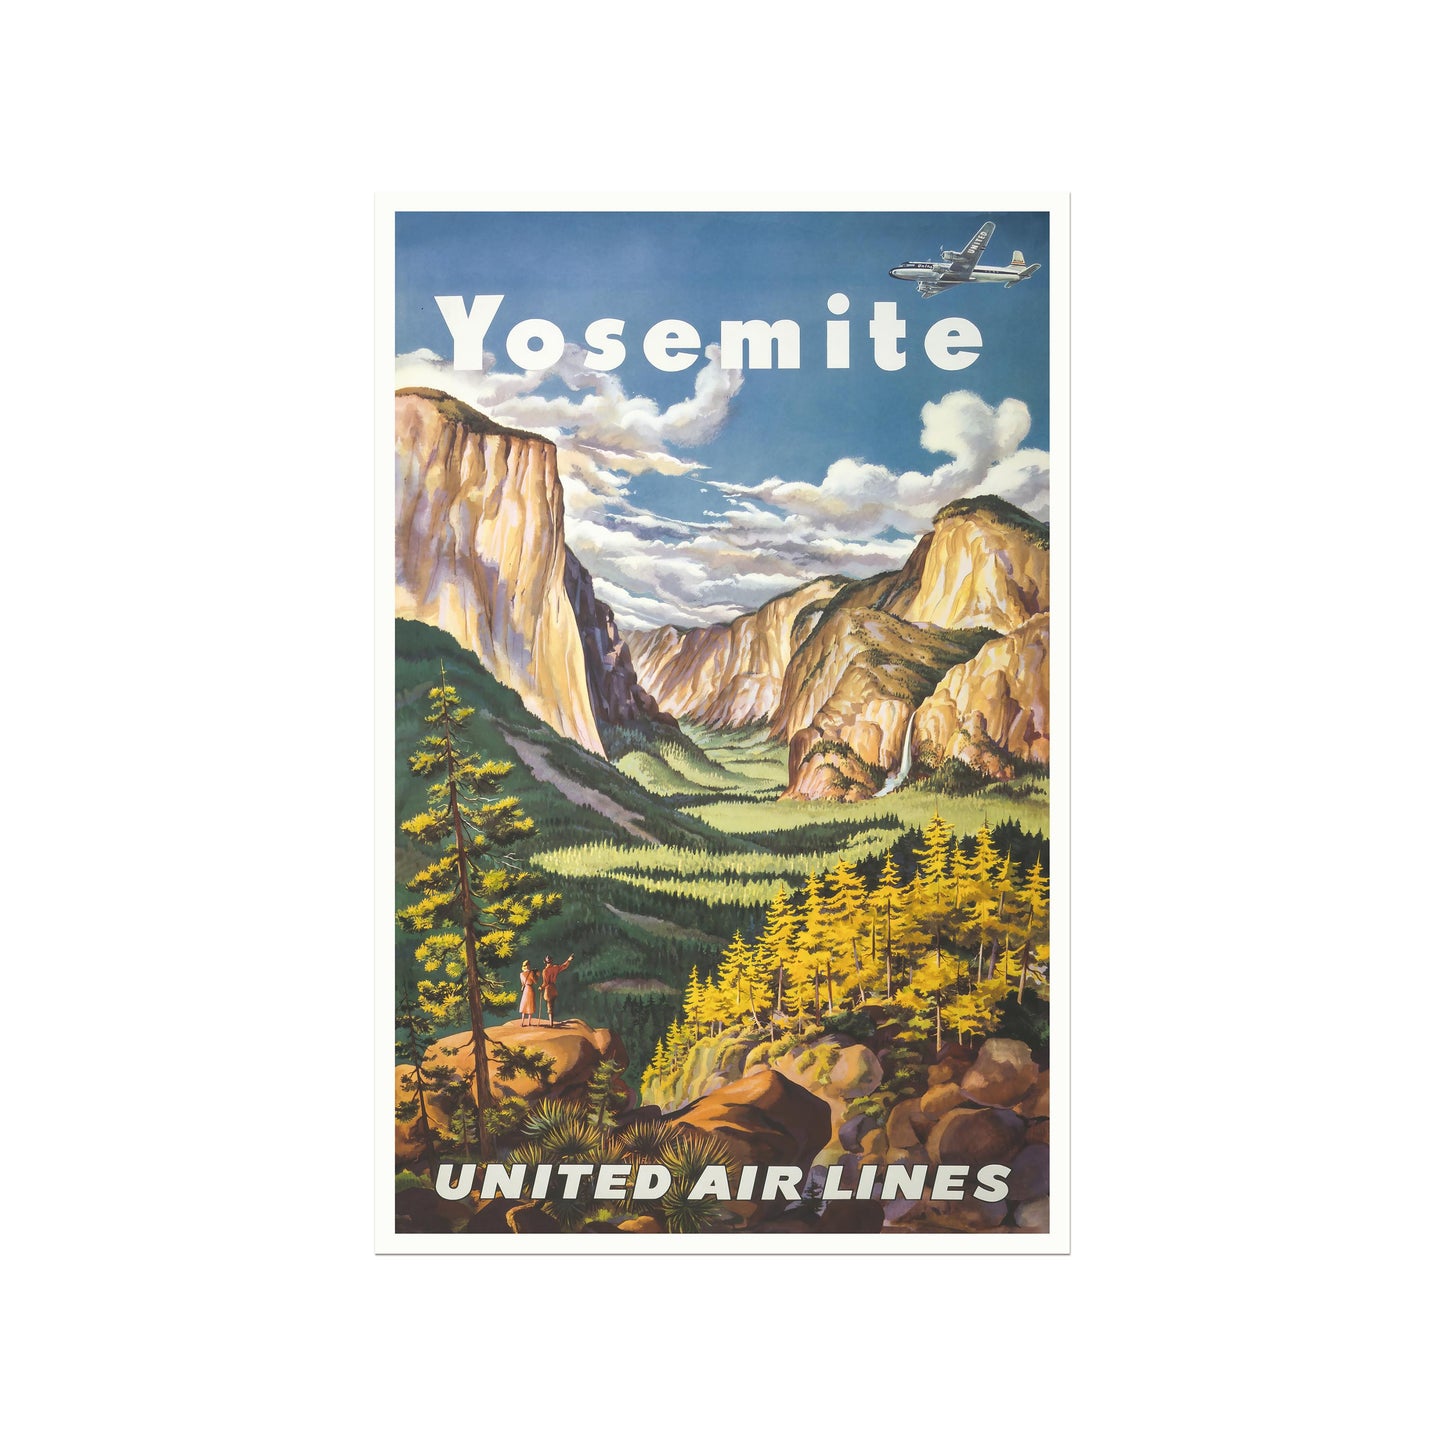 Yosemite, United Air Lines - Travel poster